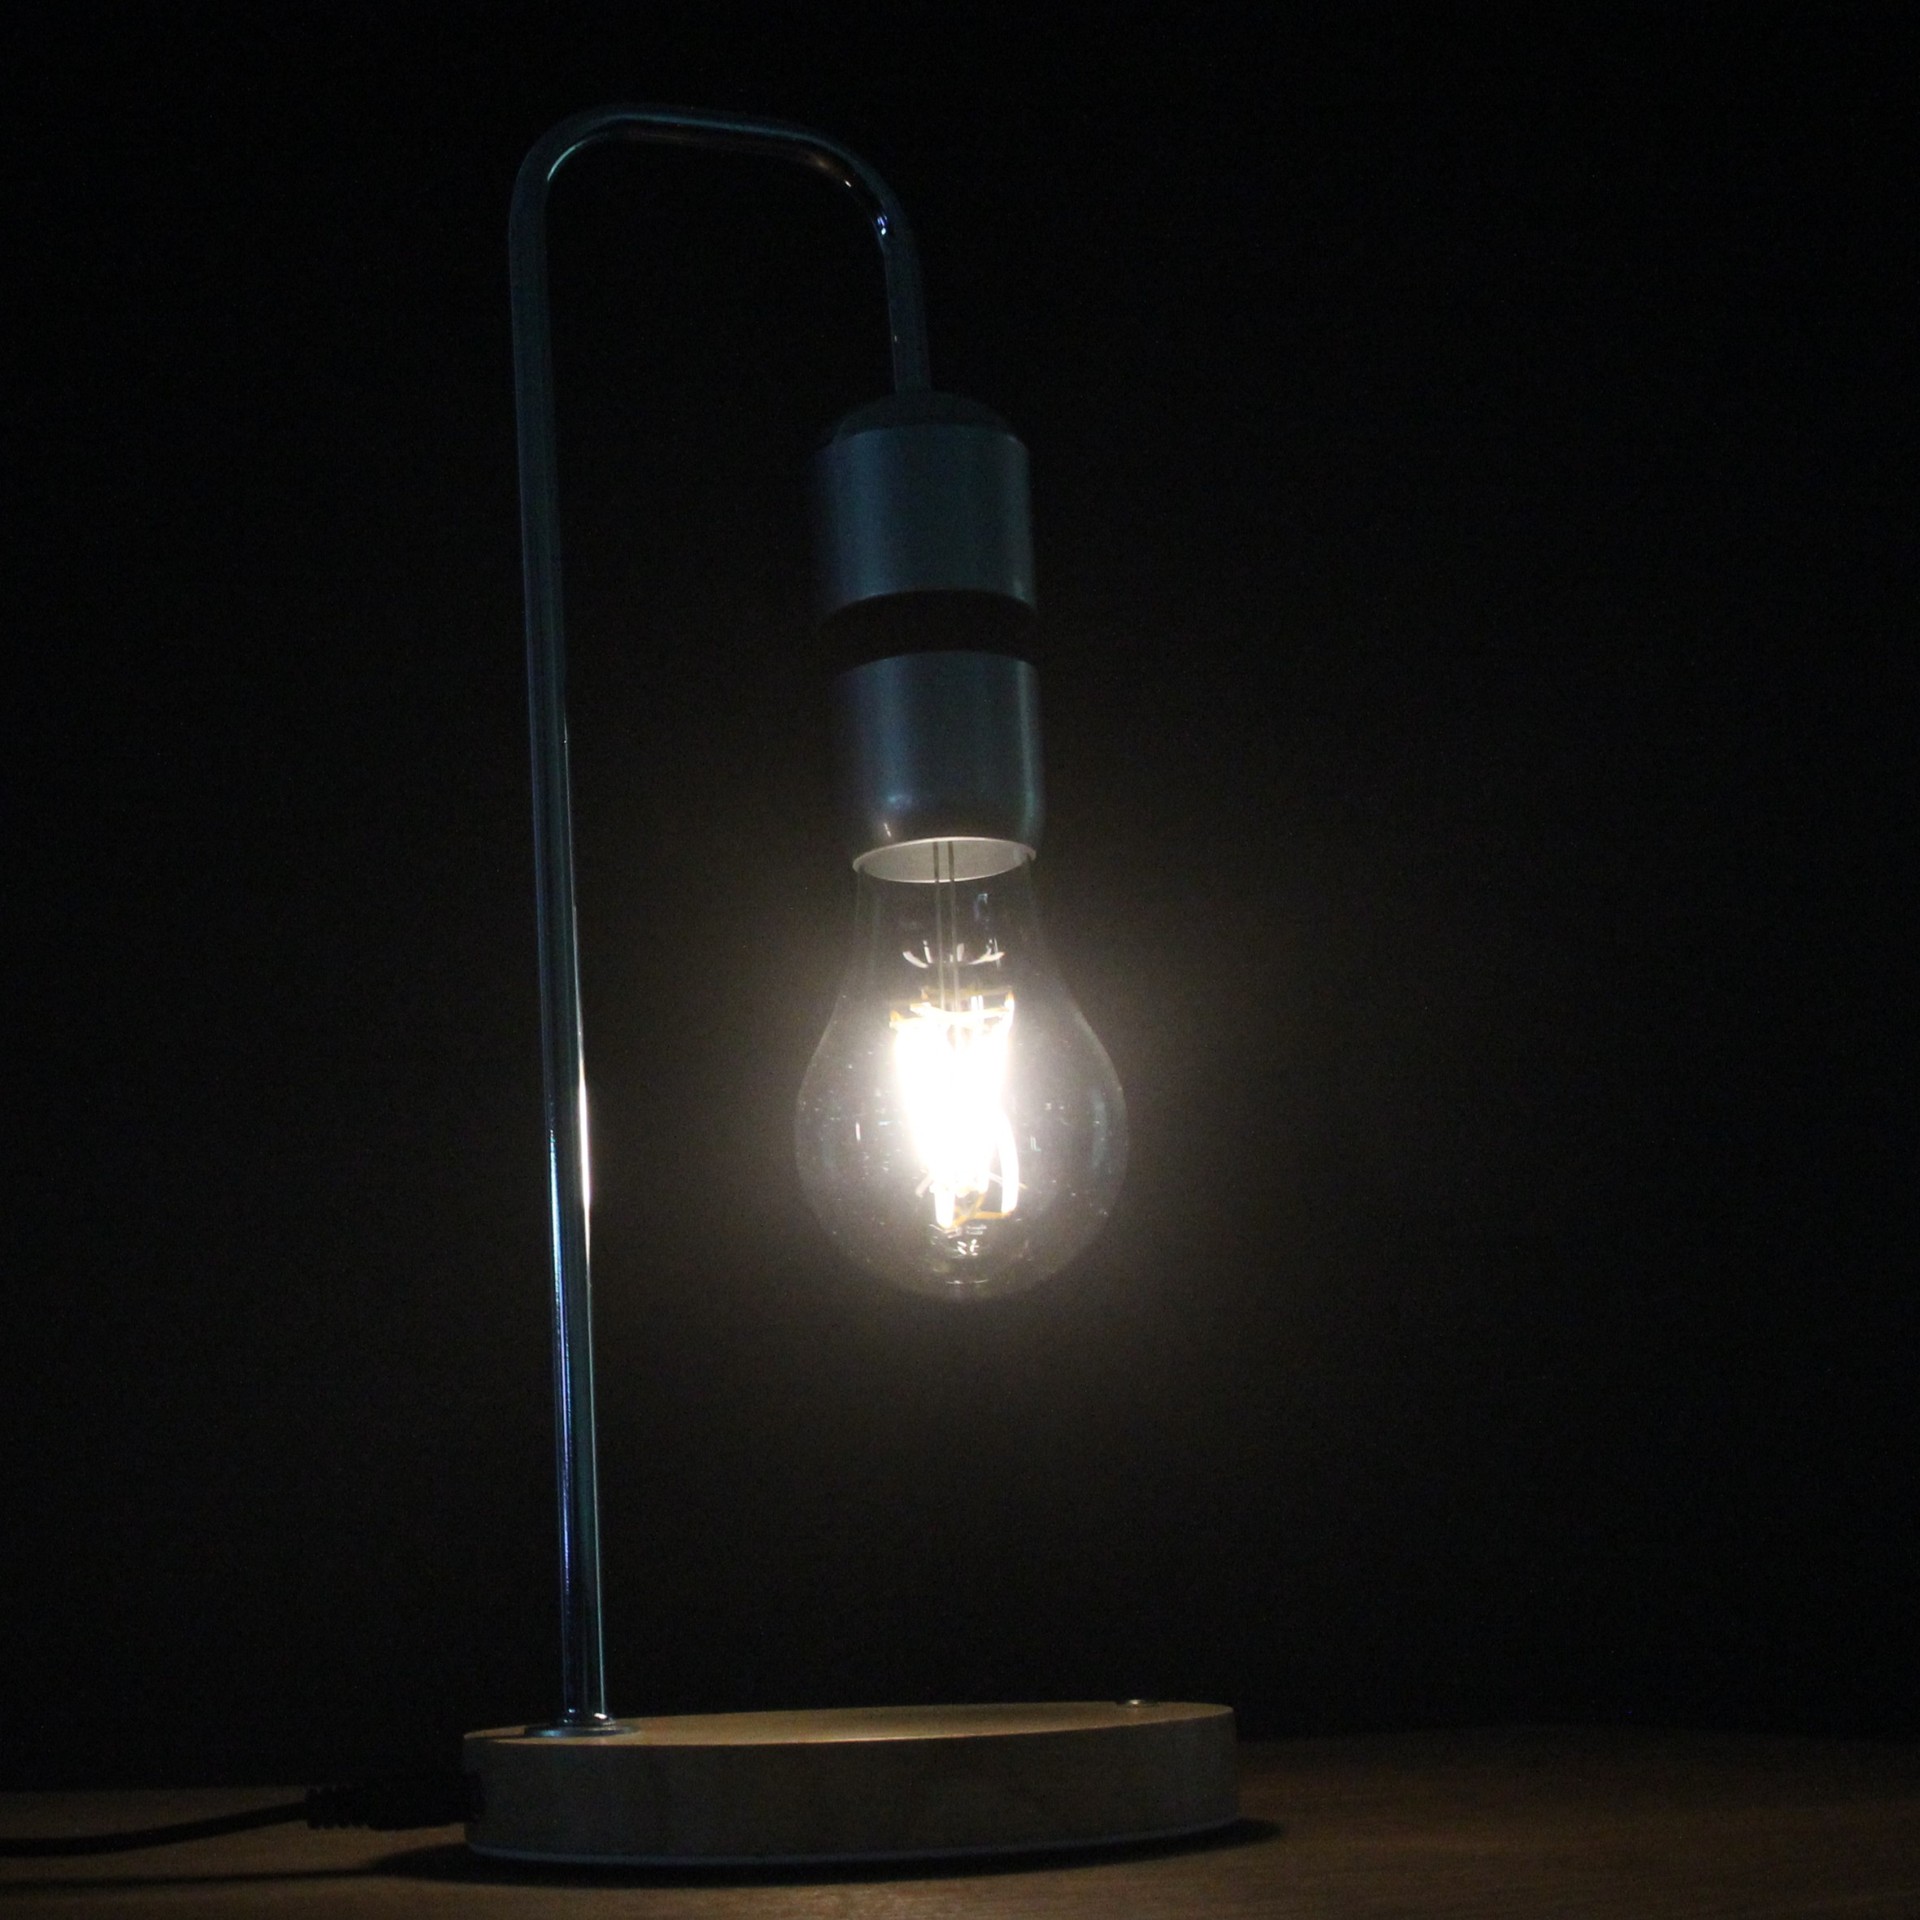 Magnetic-Levitation-LED-Light-Bulb-Wireless-Charging-LED-Night-Light-Desk-Lamps-Bulb-For-Home-Decora-1926813-5